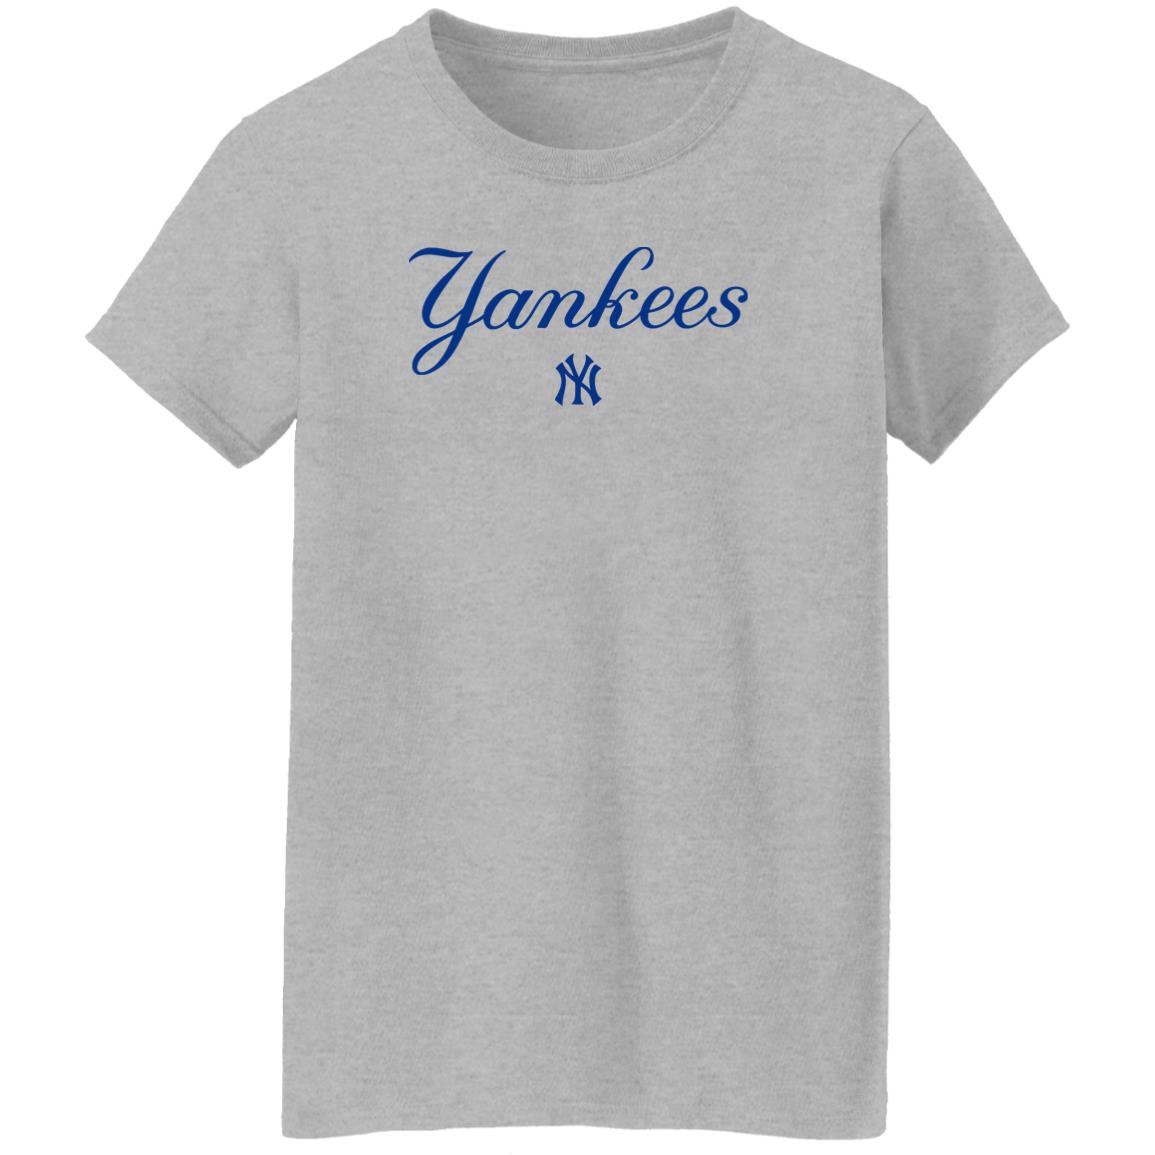 Eddie Kingston Double Or Nothing Yankees Shirt